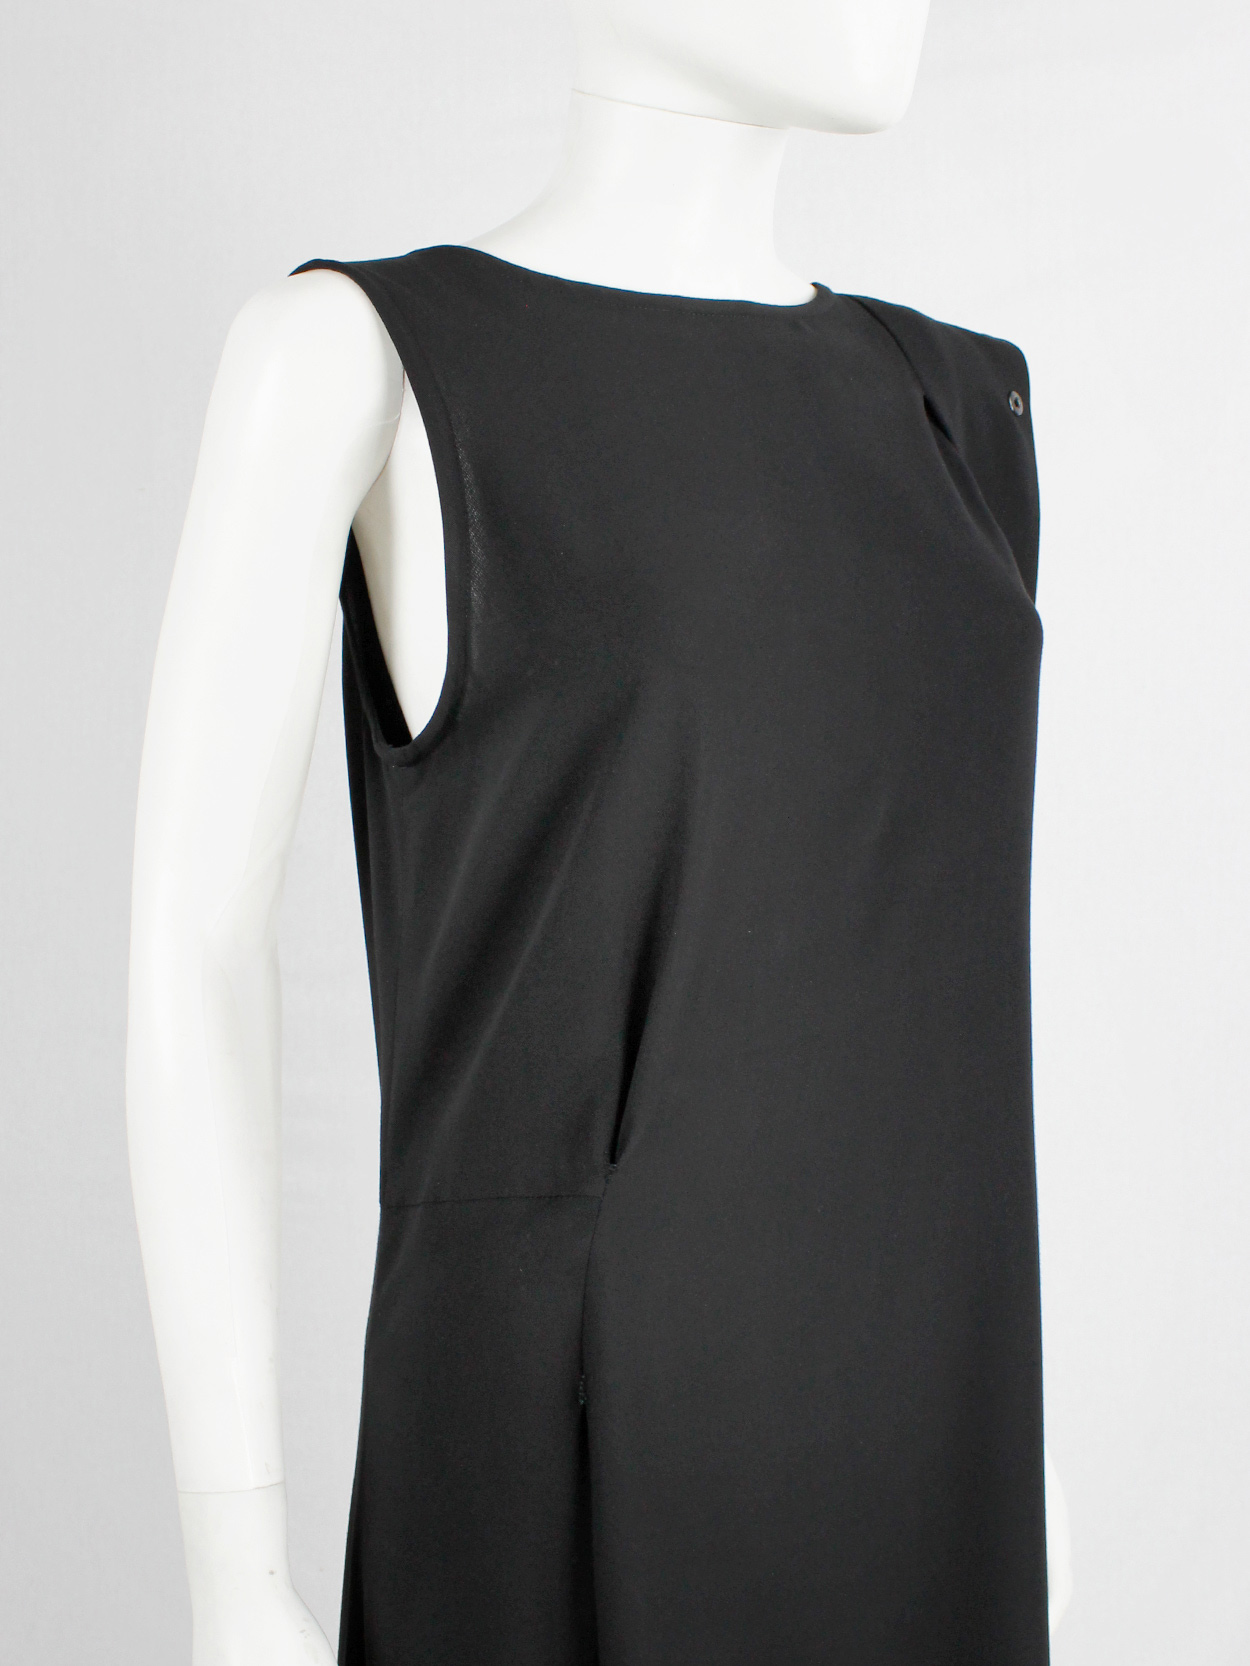 Ann Demeulemeester black asymmetric maxi dress with snap button sash spring 2013 (16)